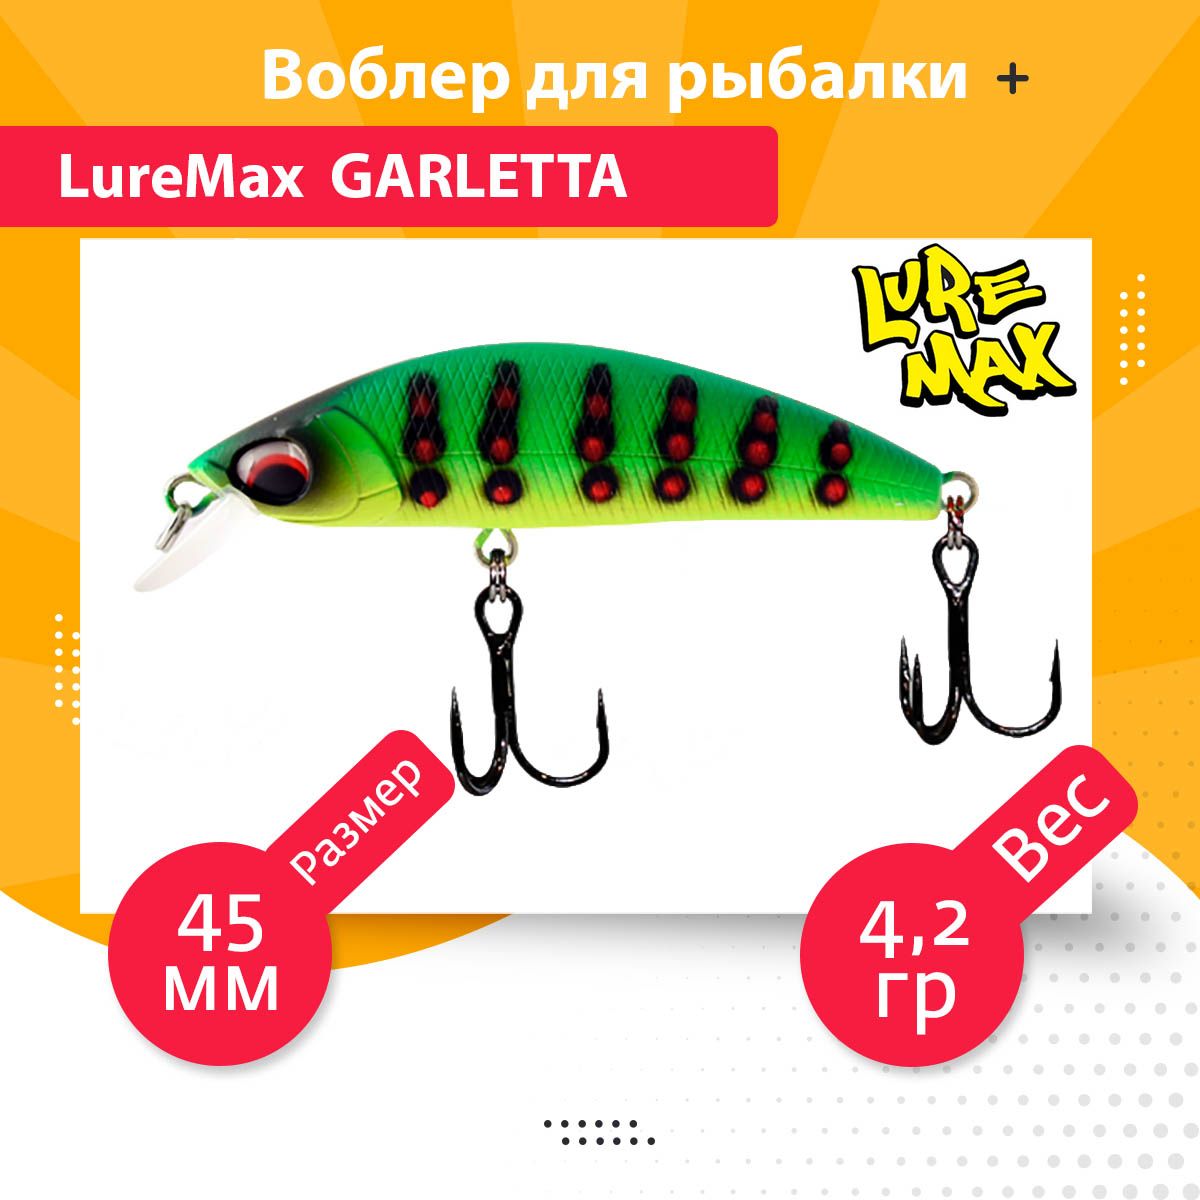 Воблер для рыбалки LureMax GARLETTA LWG45S-178